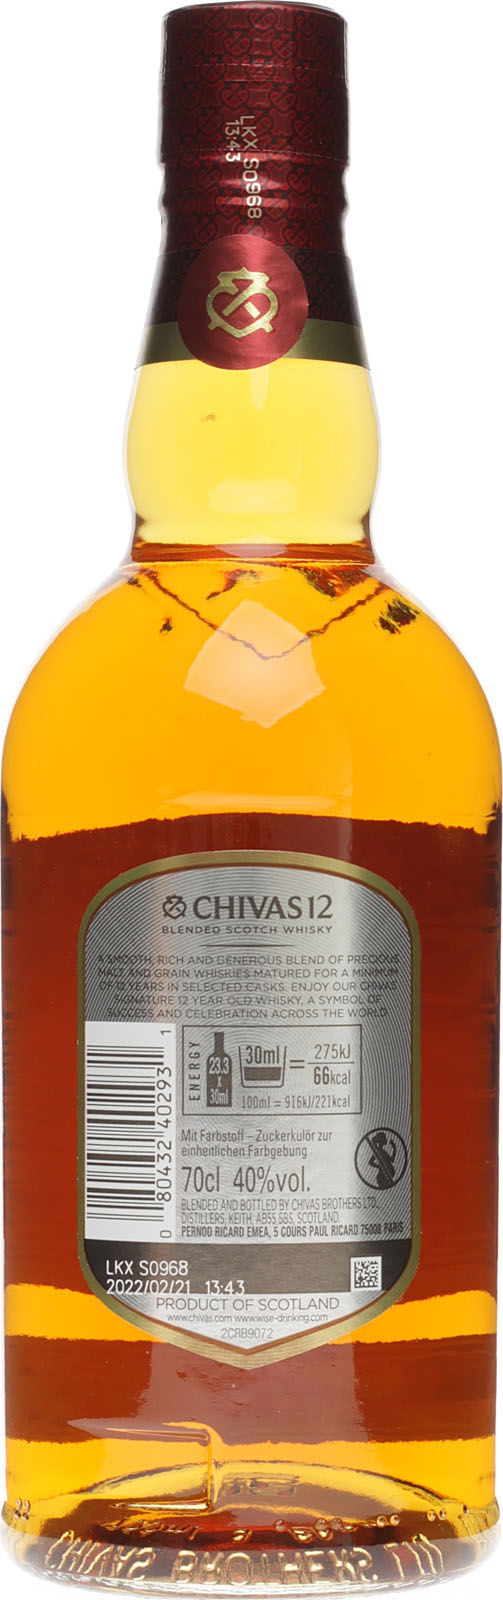 Chivas Premium Scotch - Regal Blended 12 Jahre Whisky m